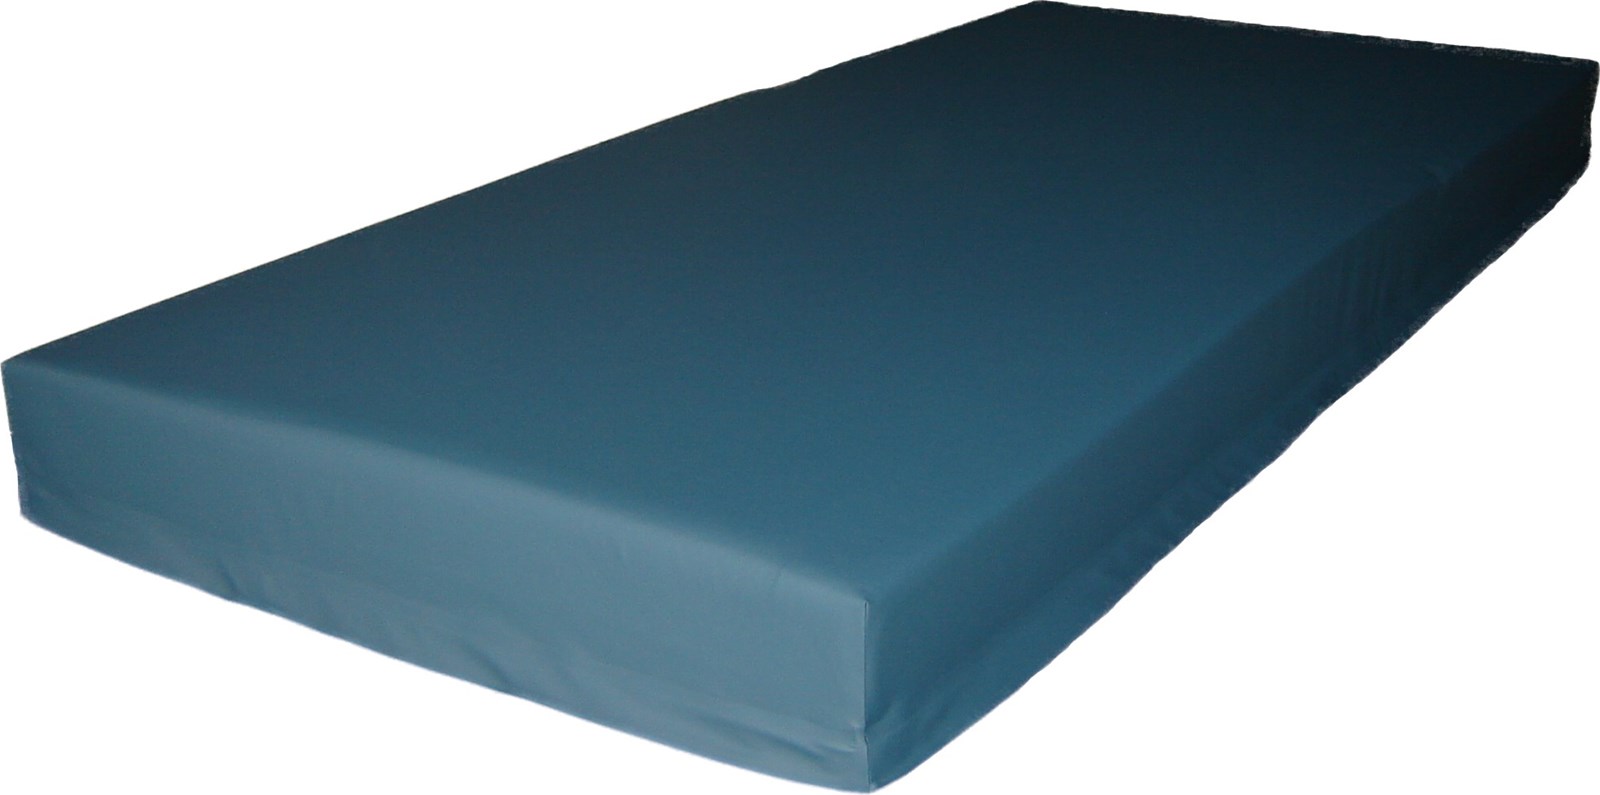 commercial vinyl mattress cover